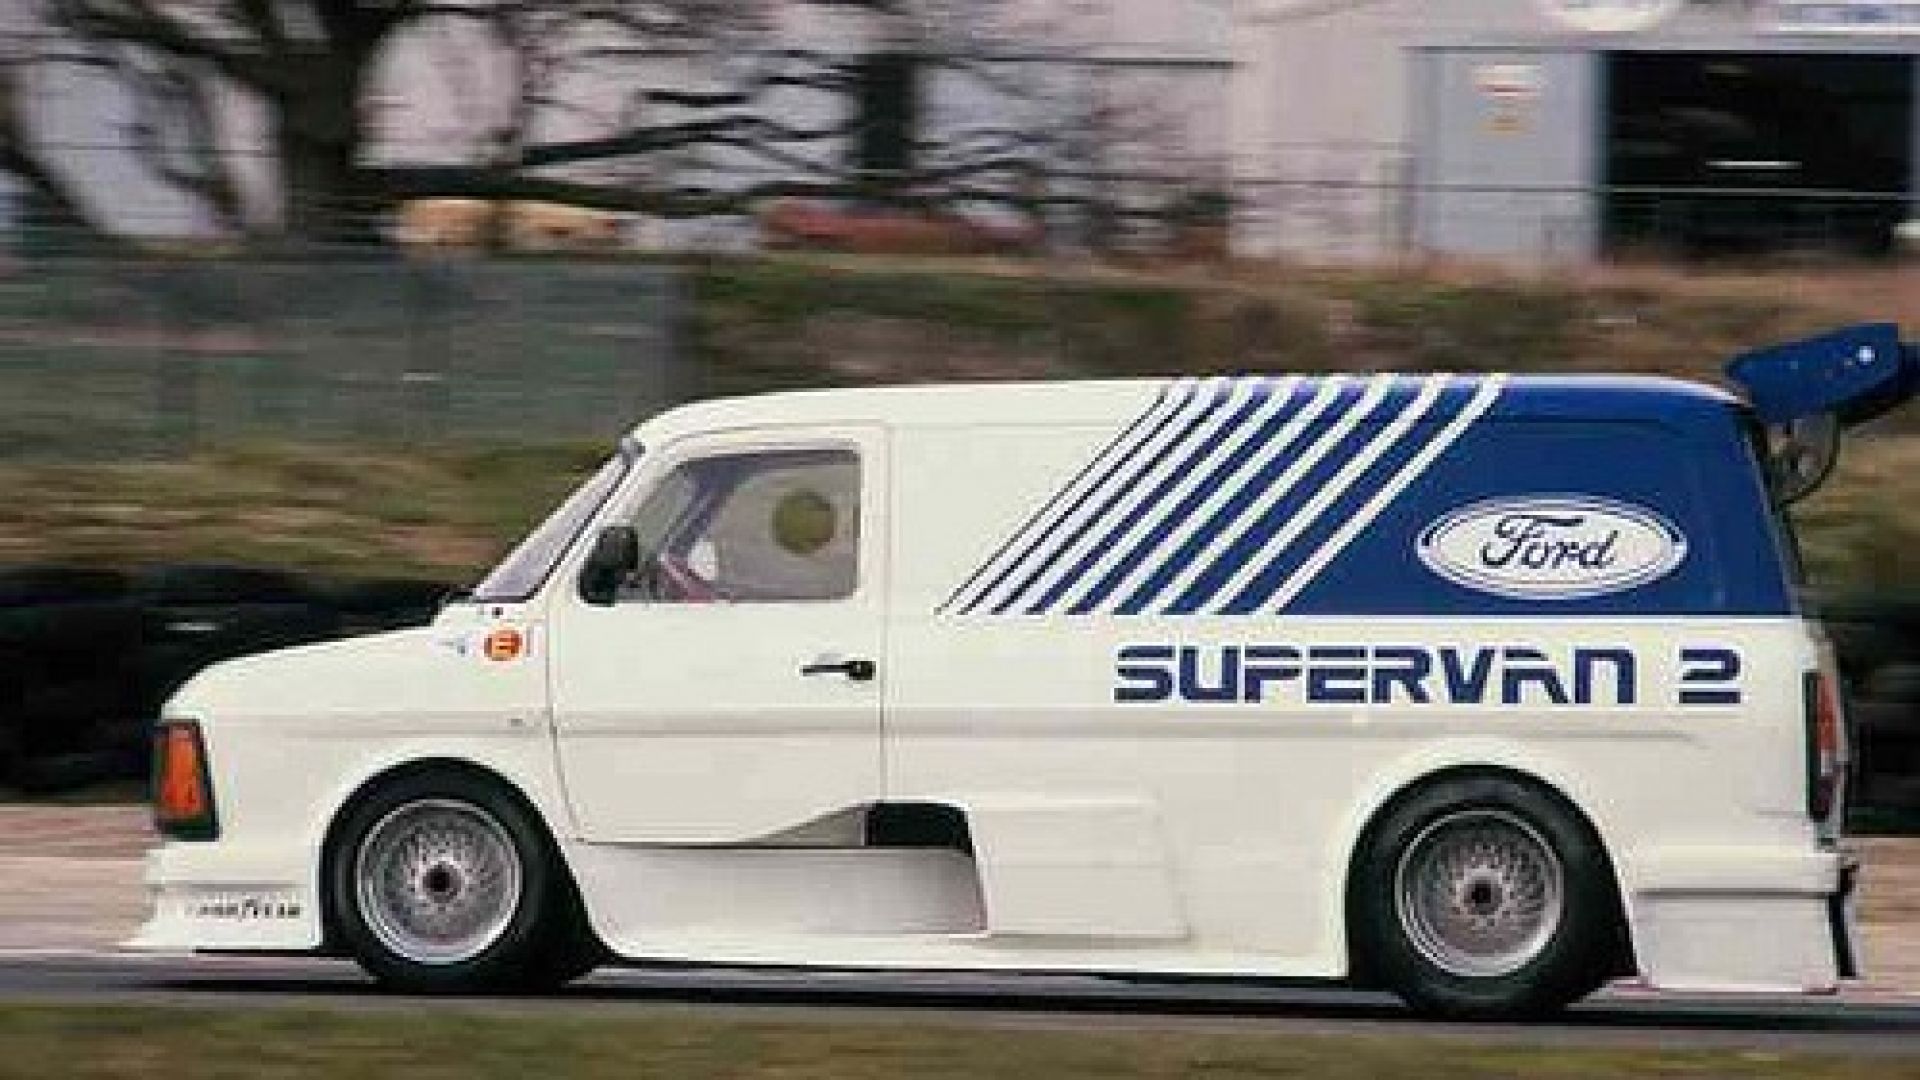 Ford supervan 2